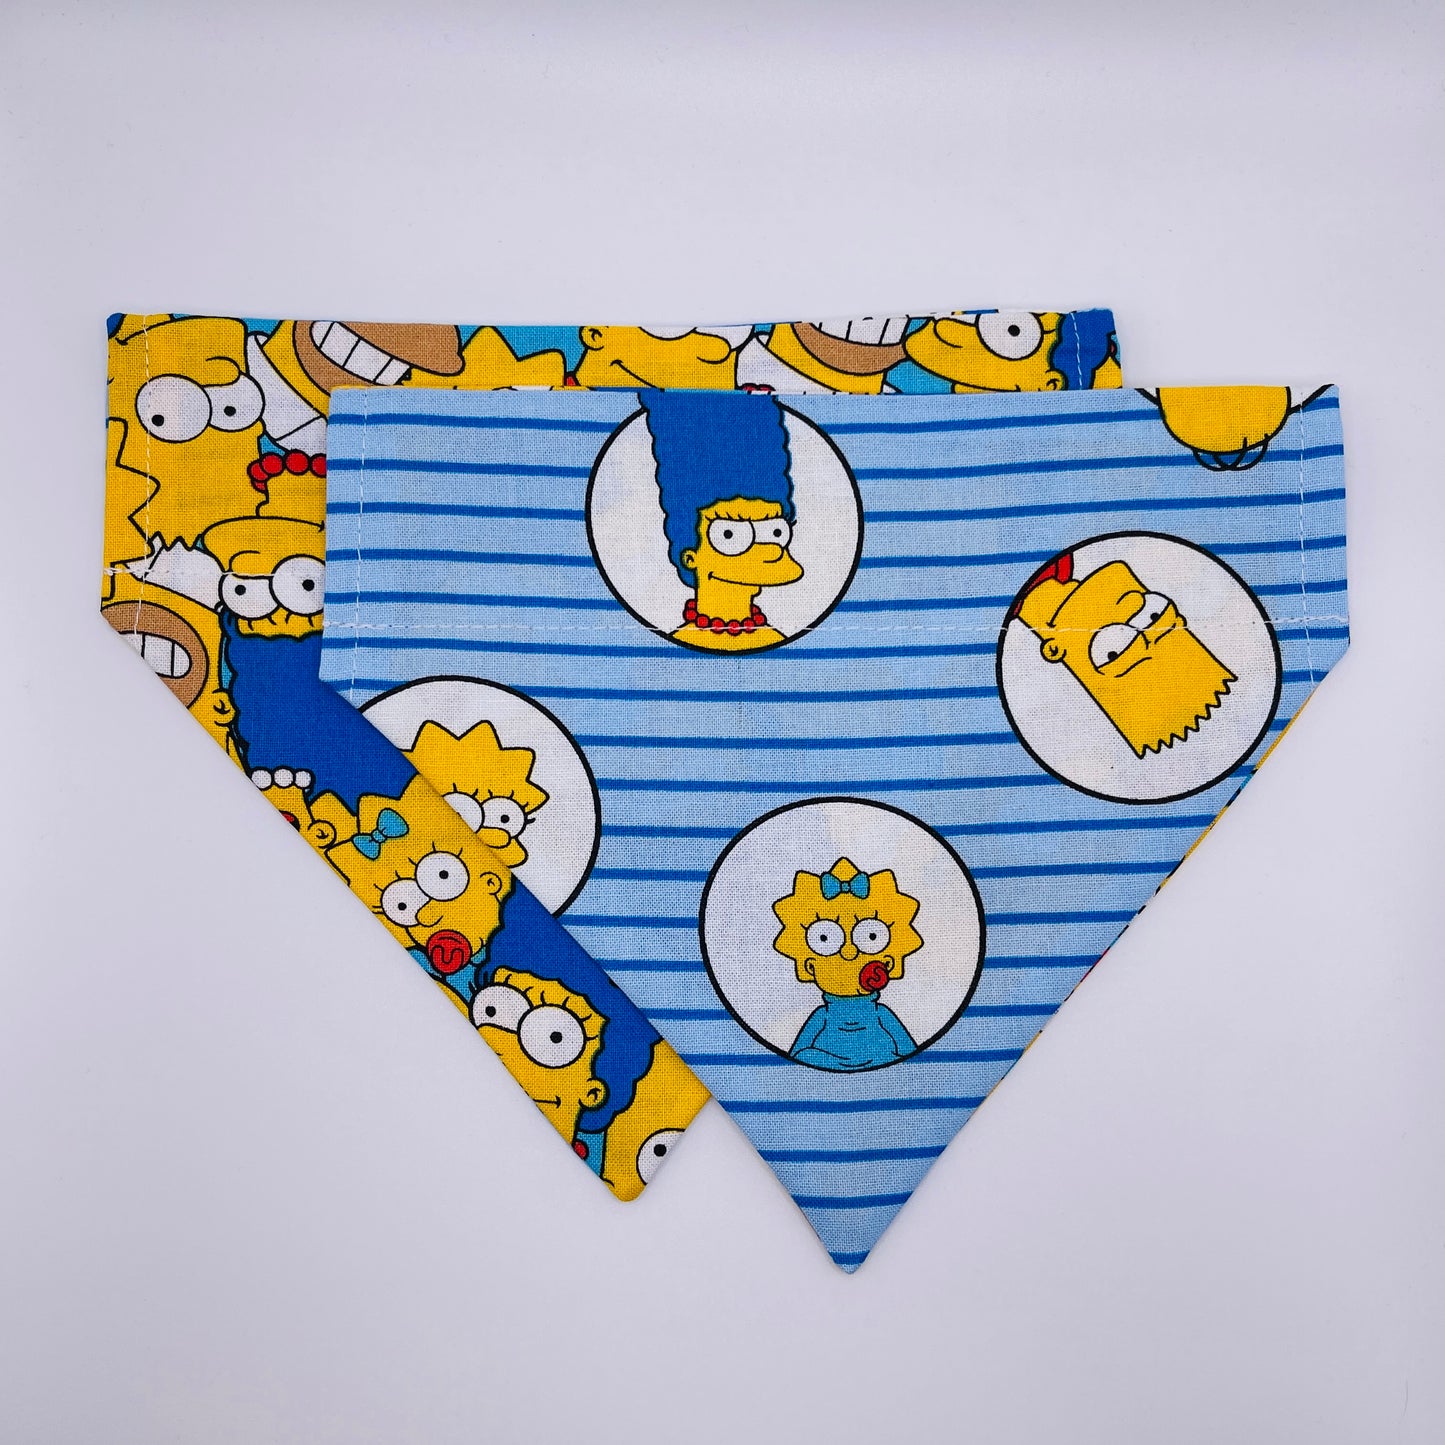 The Simpsons on Stripes Bandana